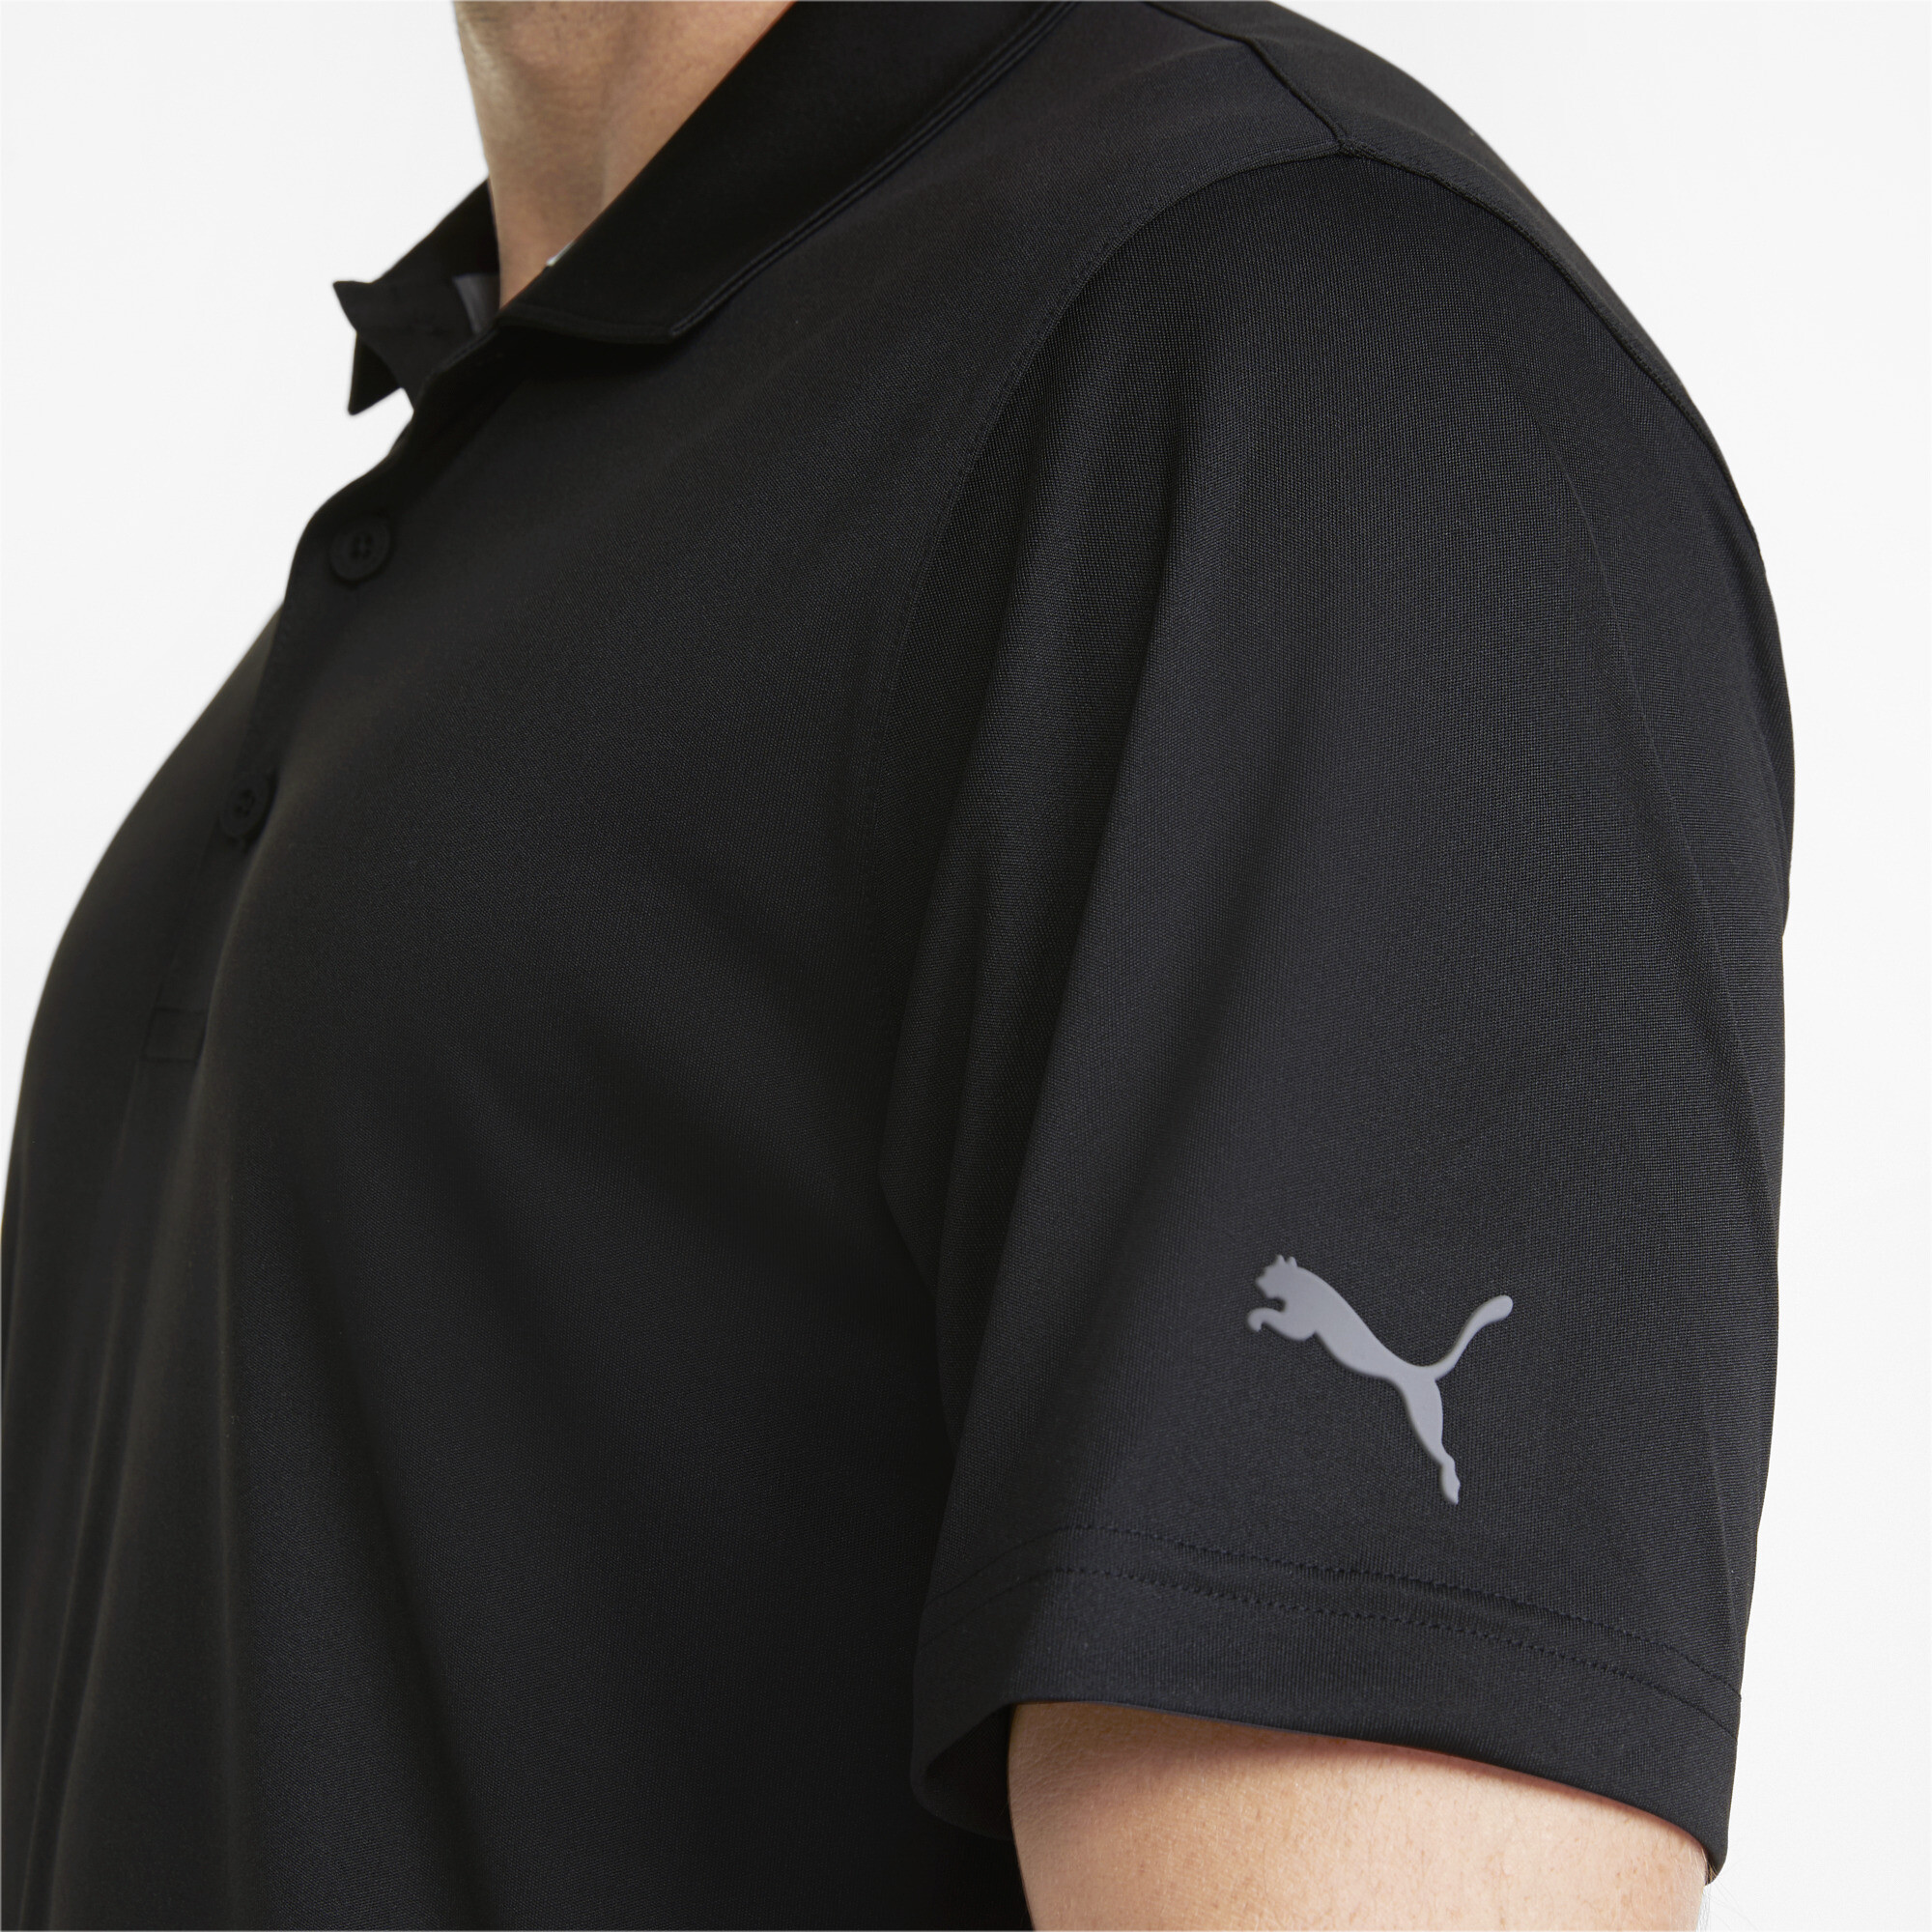 Men's Puma Gamer's Golf Polo Shirt T-Shirt, Black T-Shirt, Size 6XL T-Shirt, Clothing